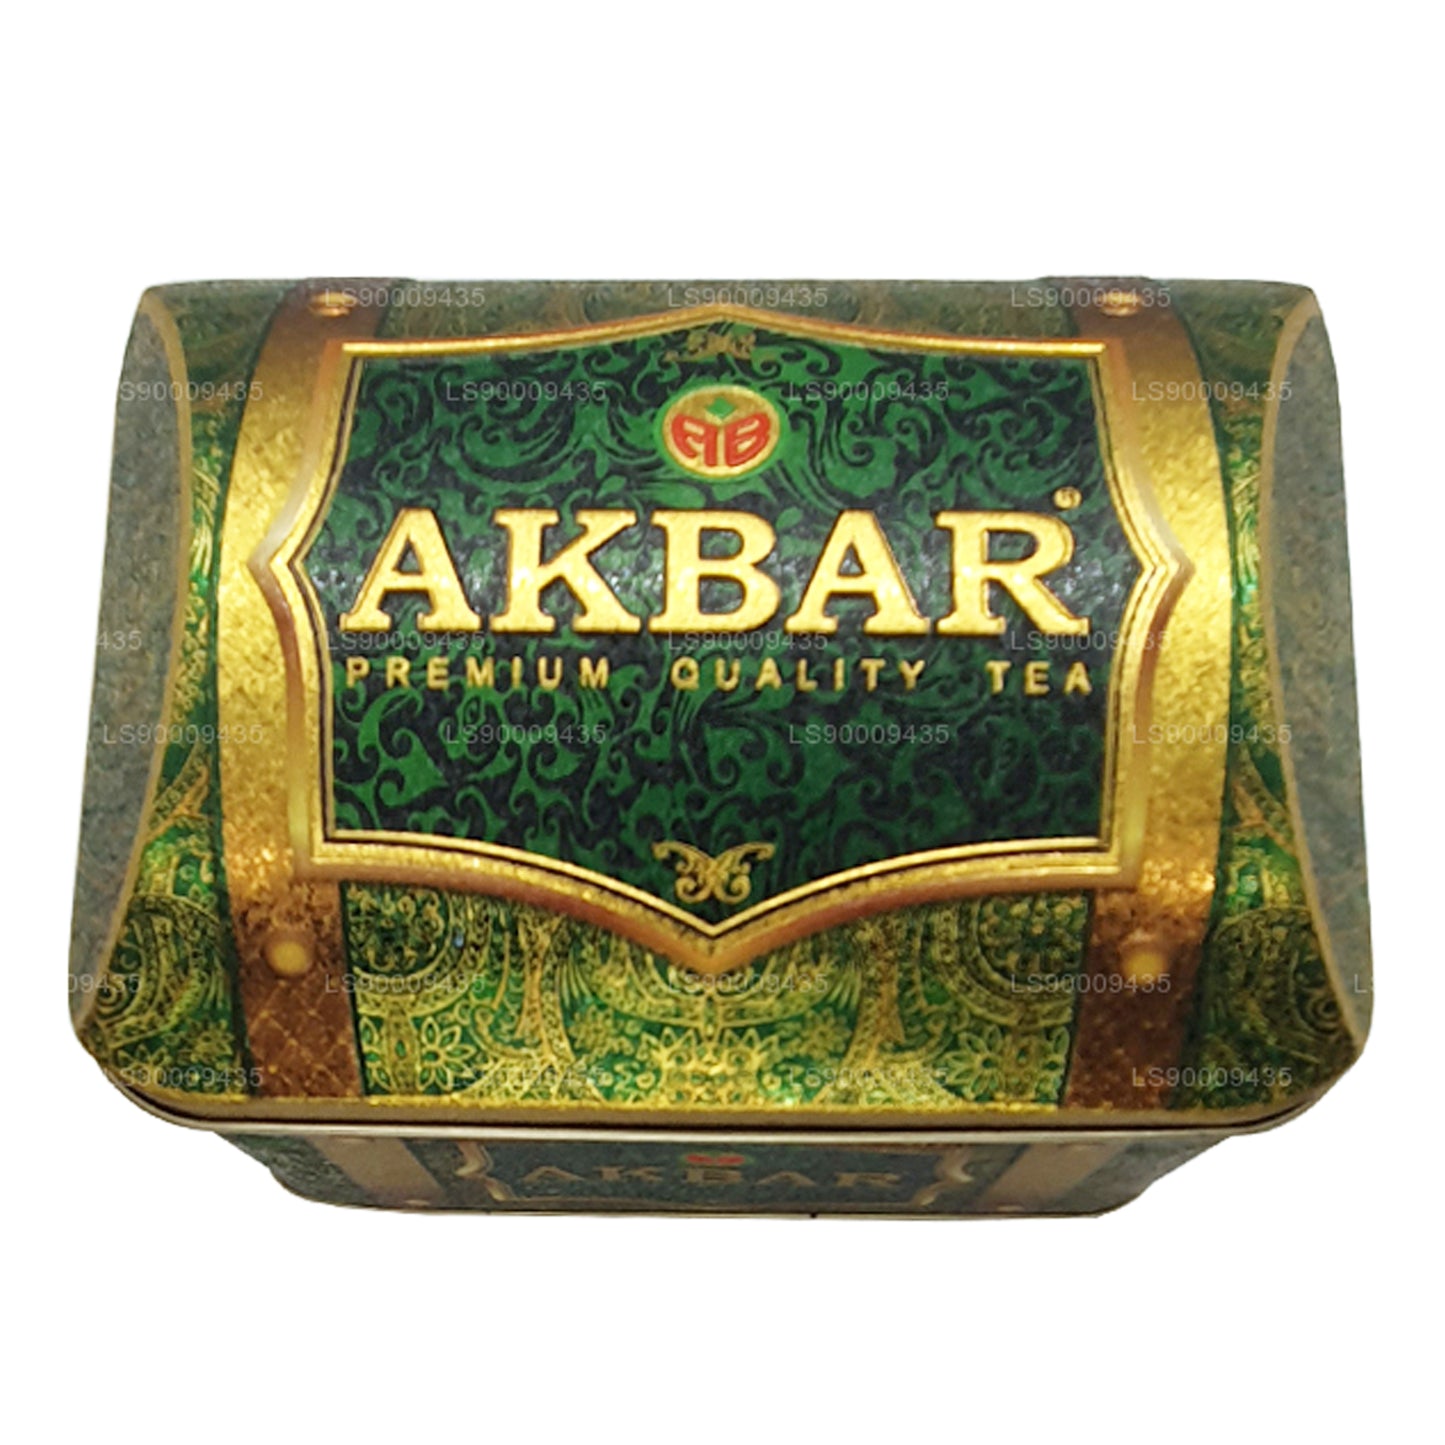 Akbar Exclusive Collection Rich Soursop Schatzkiste (250 g)